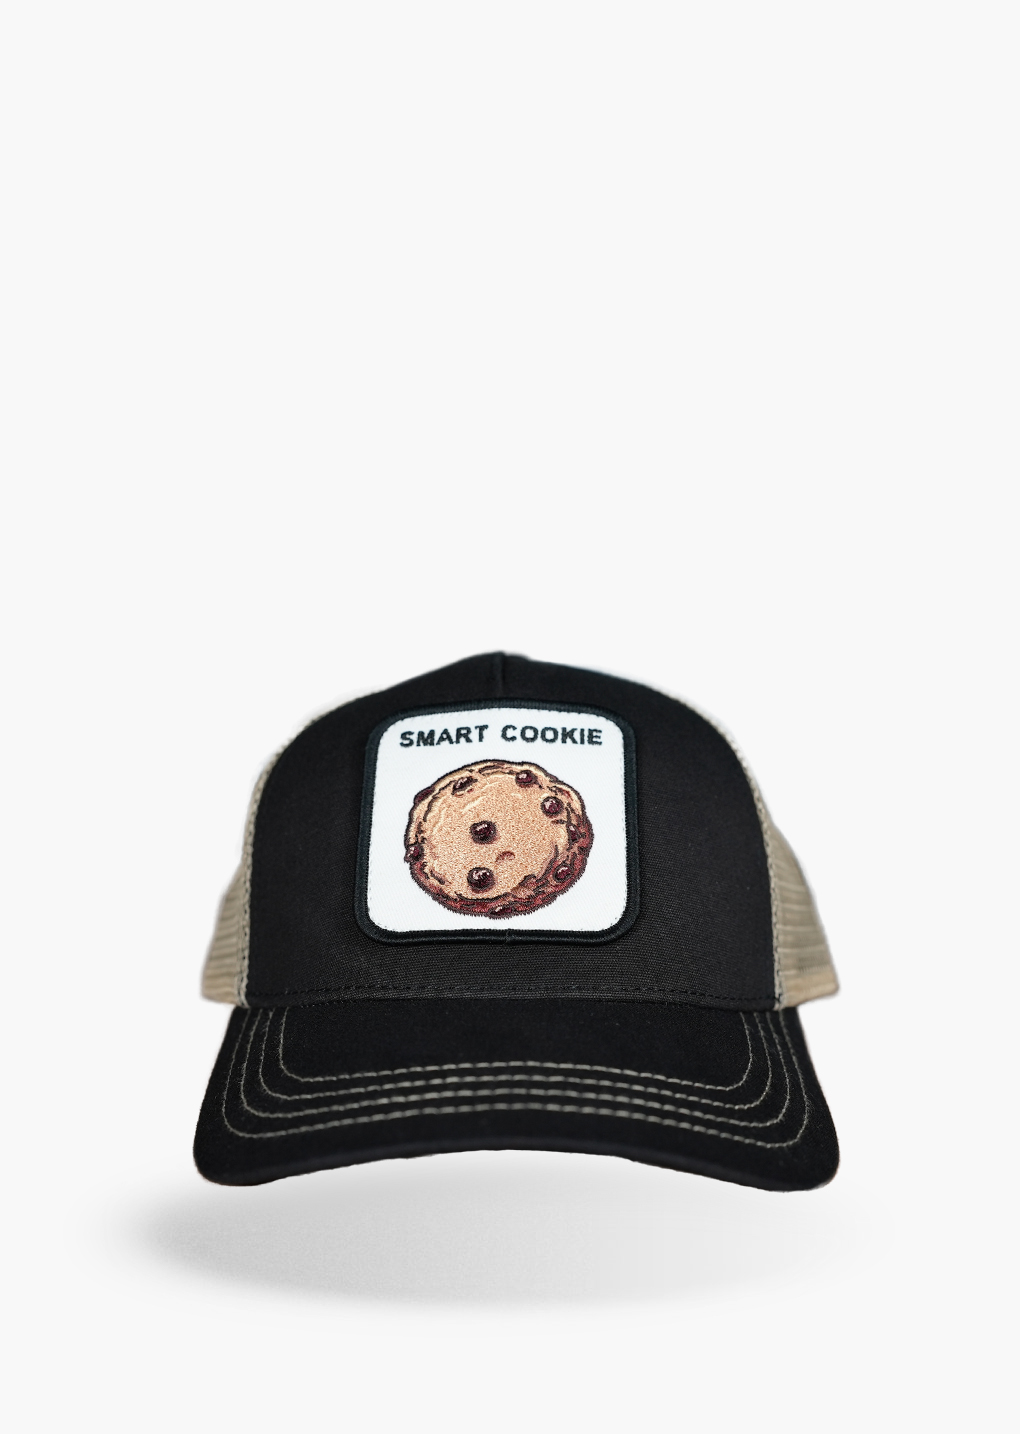 cocowi gorra